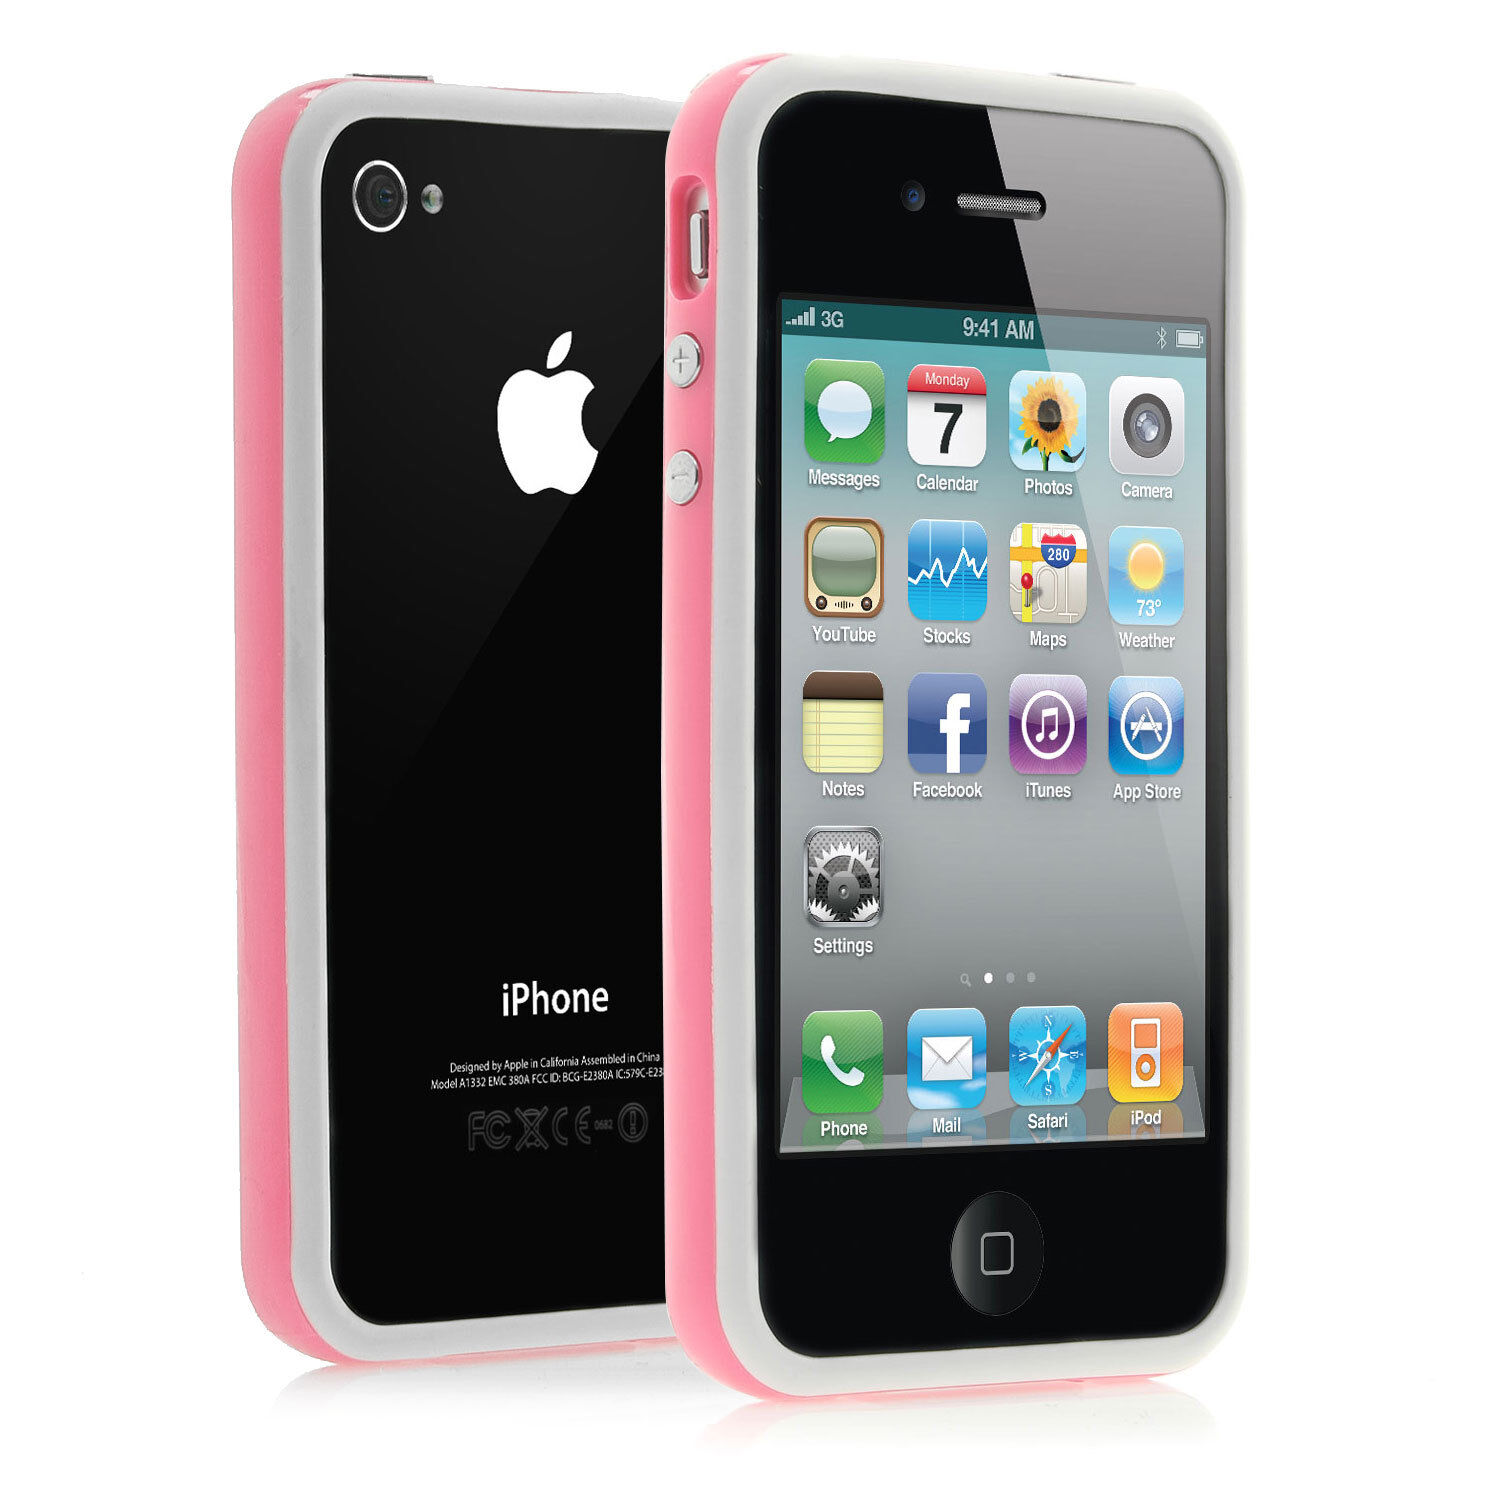 Apple iPhone 4 4s Bumper Silikon Schutz Hülle Case Cover Tasche - weiß rosa pink